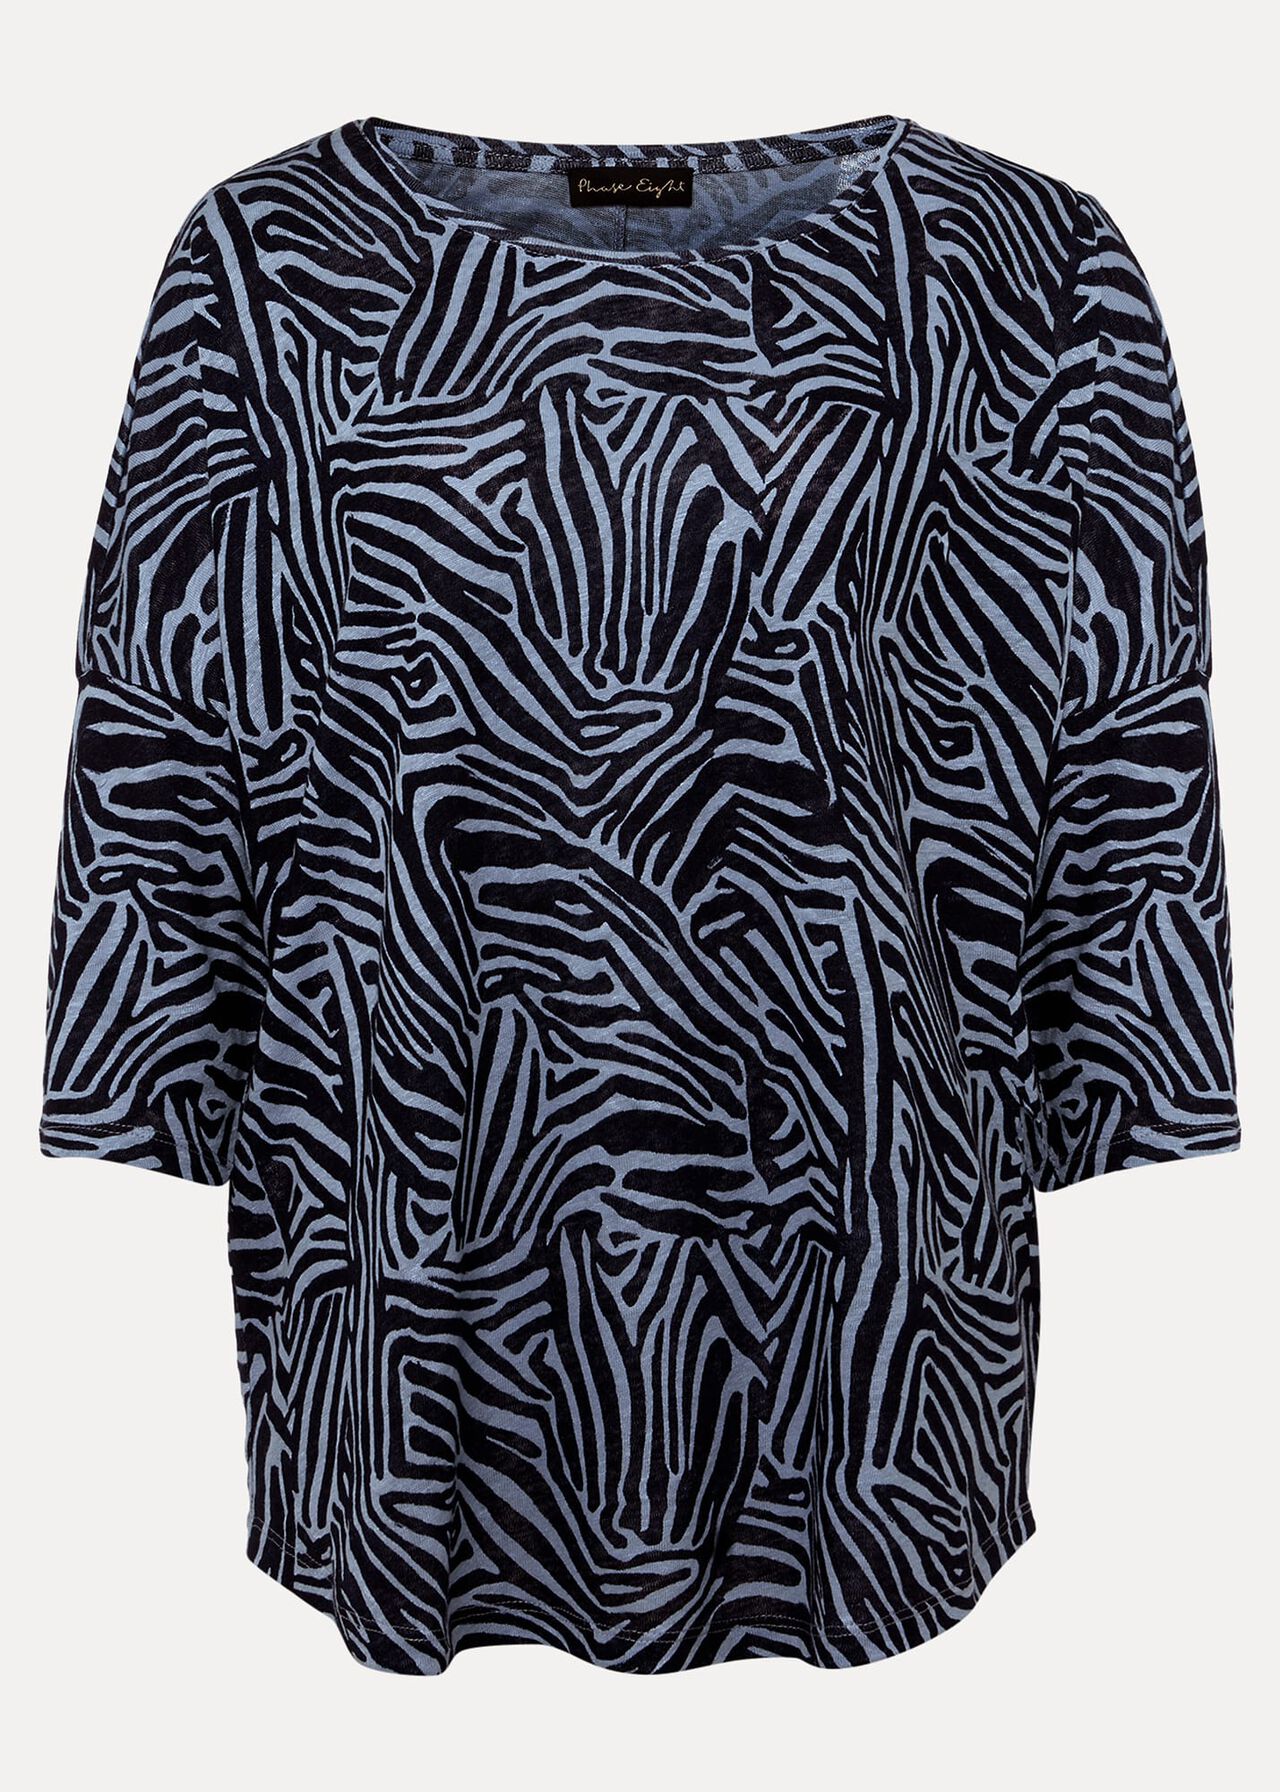 Moire Linen Zebra Print Top